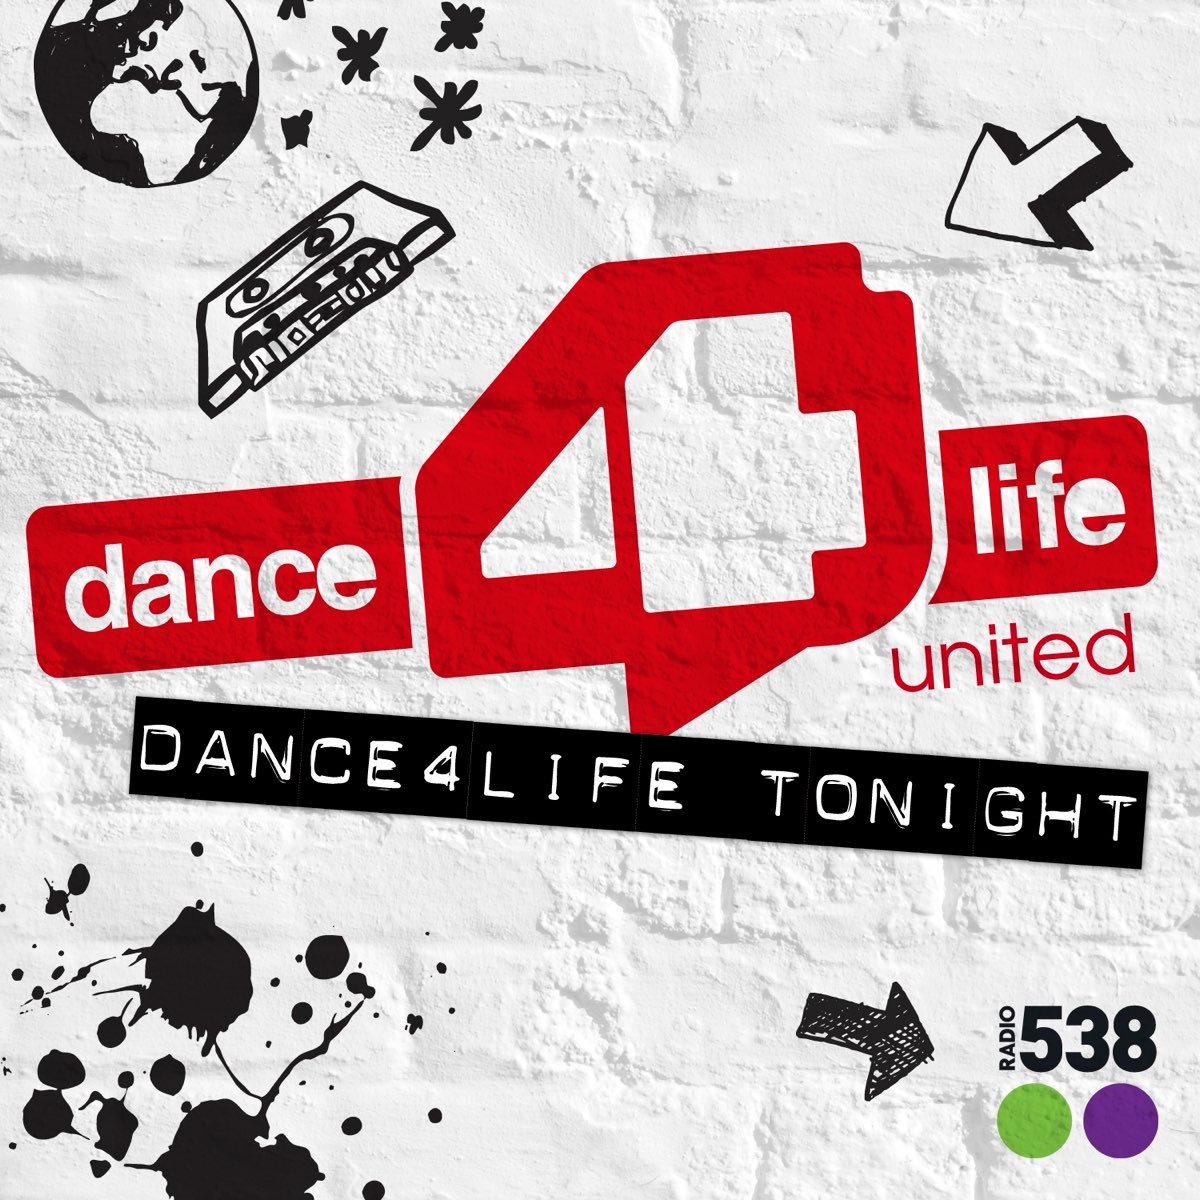 Dance4life Muscot. Dance for Life 4. Tiesto dance4life. Dance 4 life